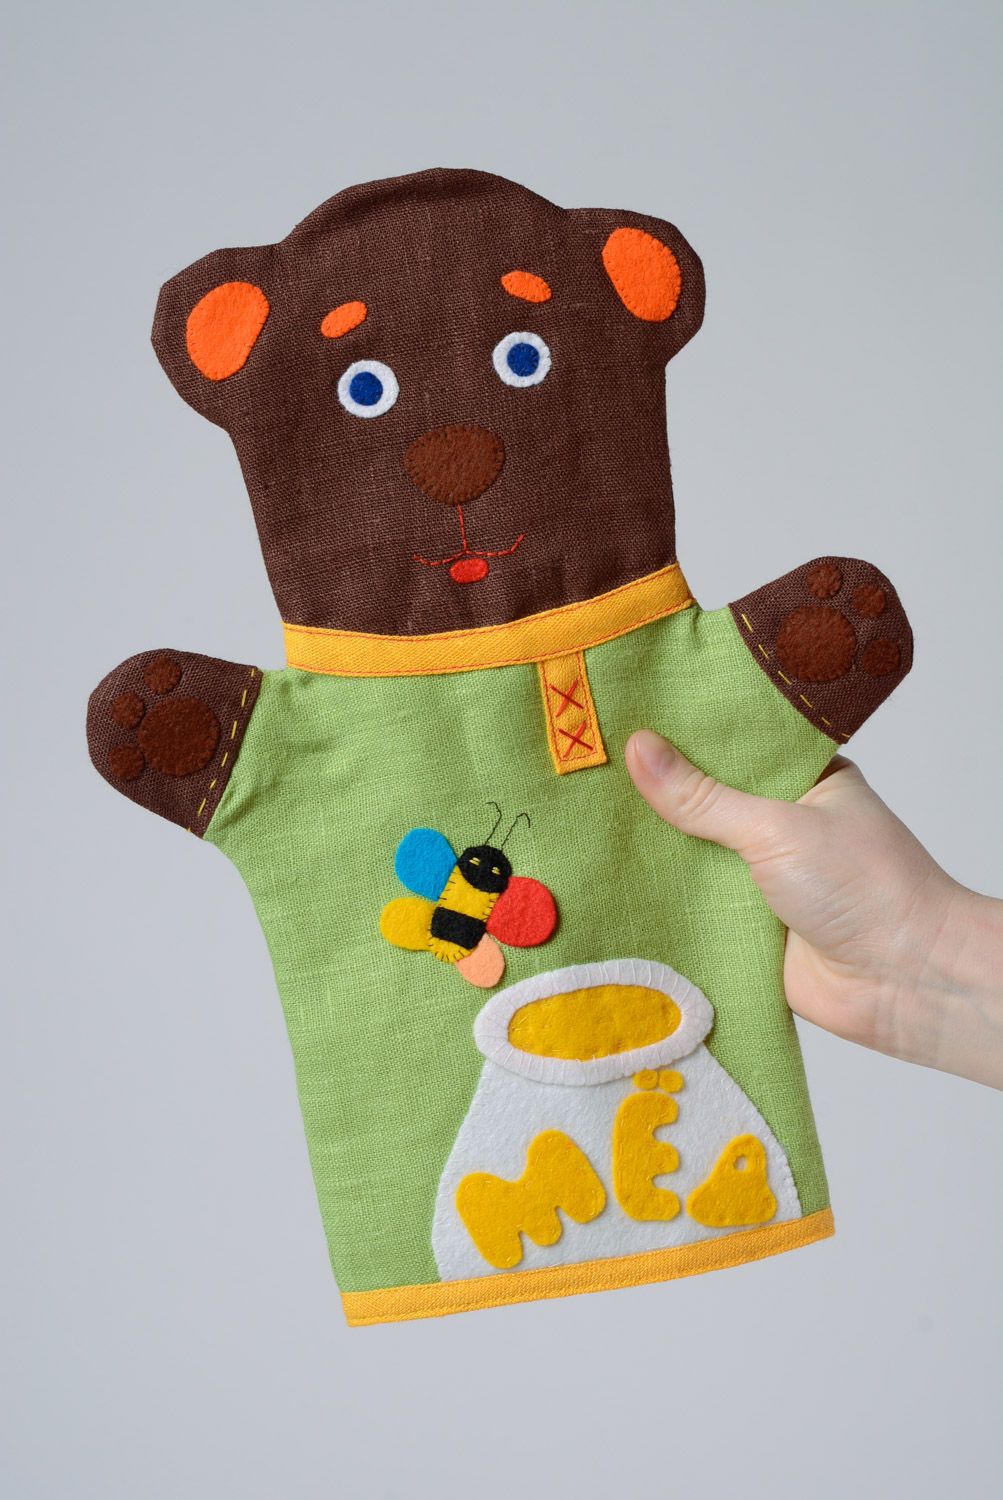 Авторская игрушка на руку кукла перчатка из ткани в виде мишки бибабо хенд мэйд фото 1